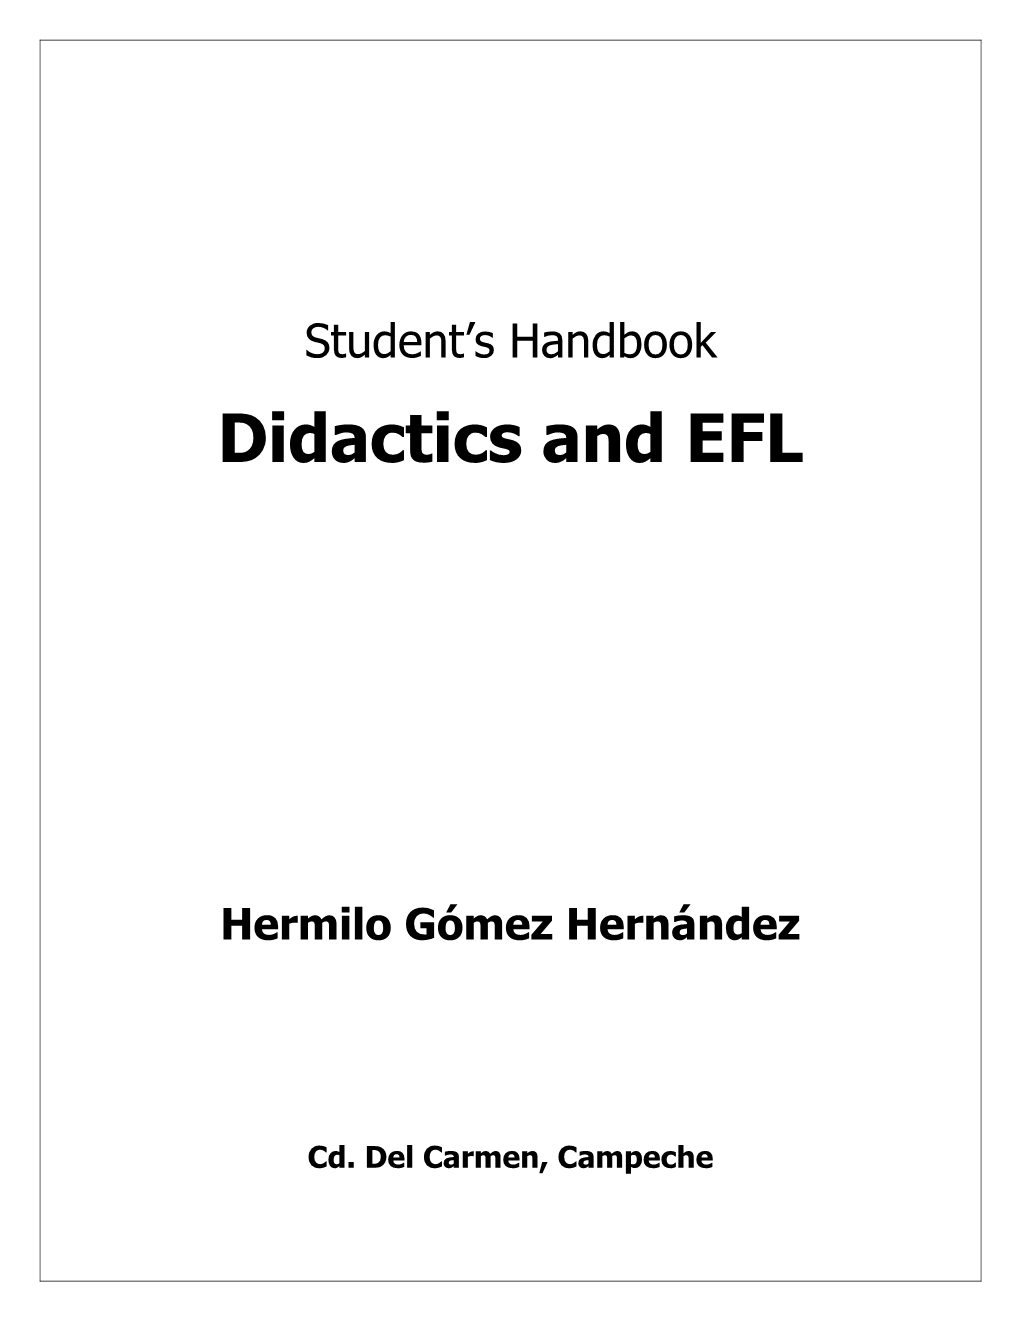 Didactics and EFL